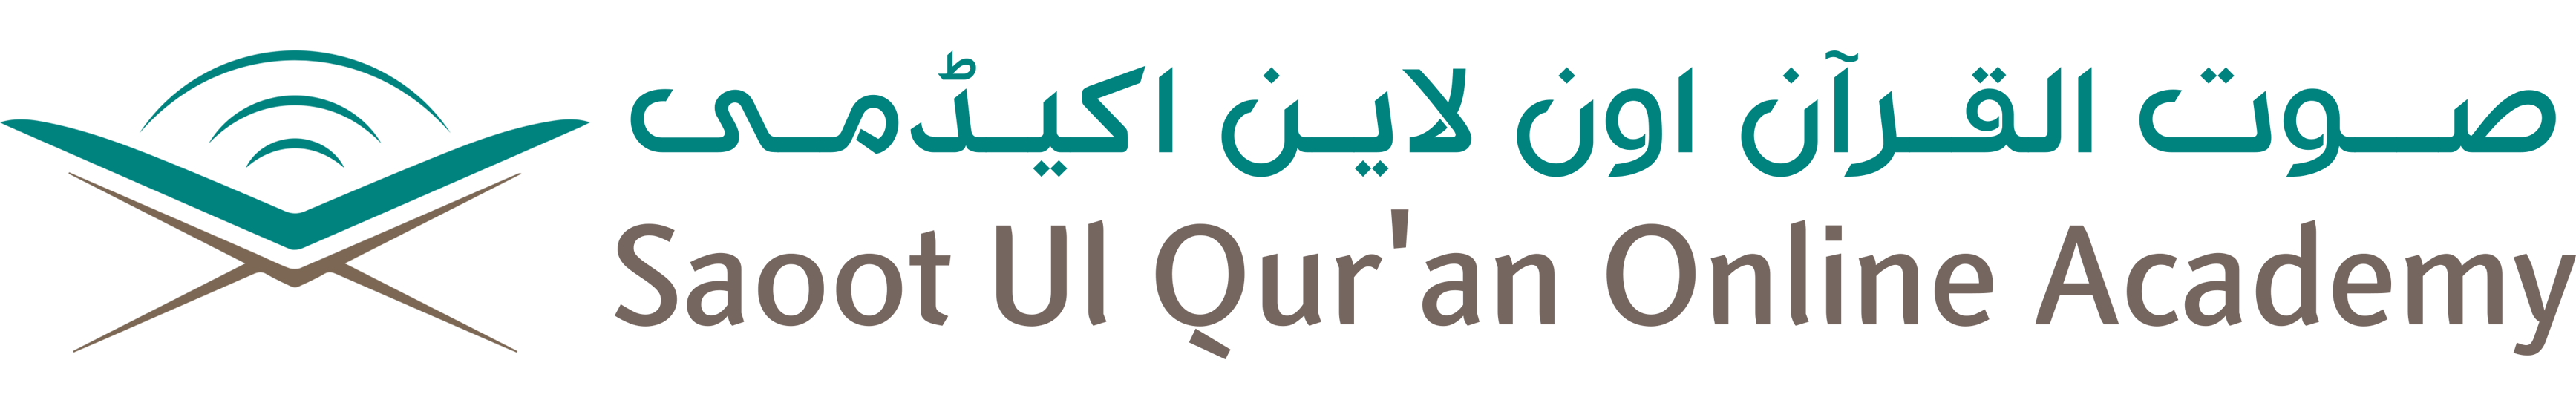 Saoot UL Quran Online Academy